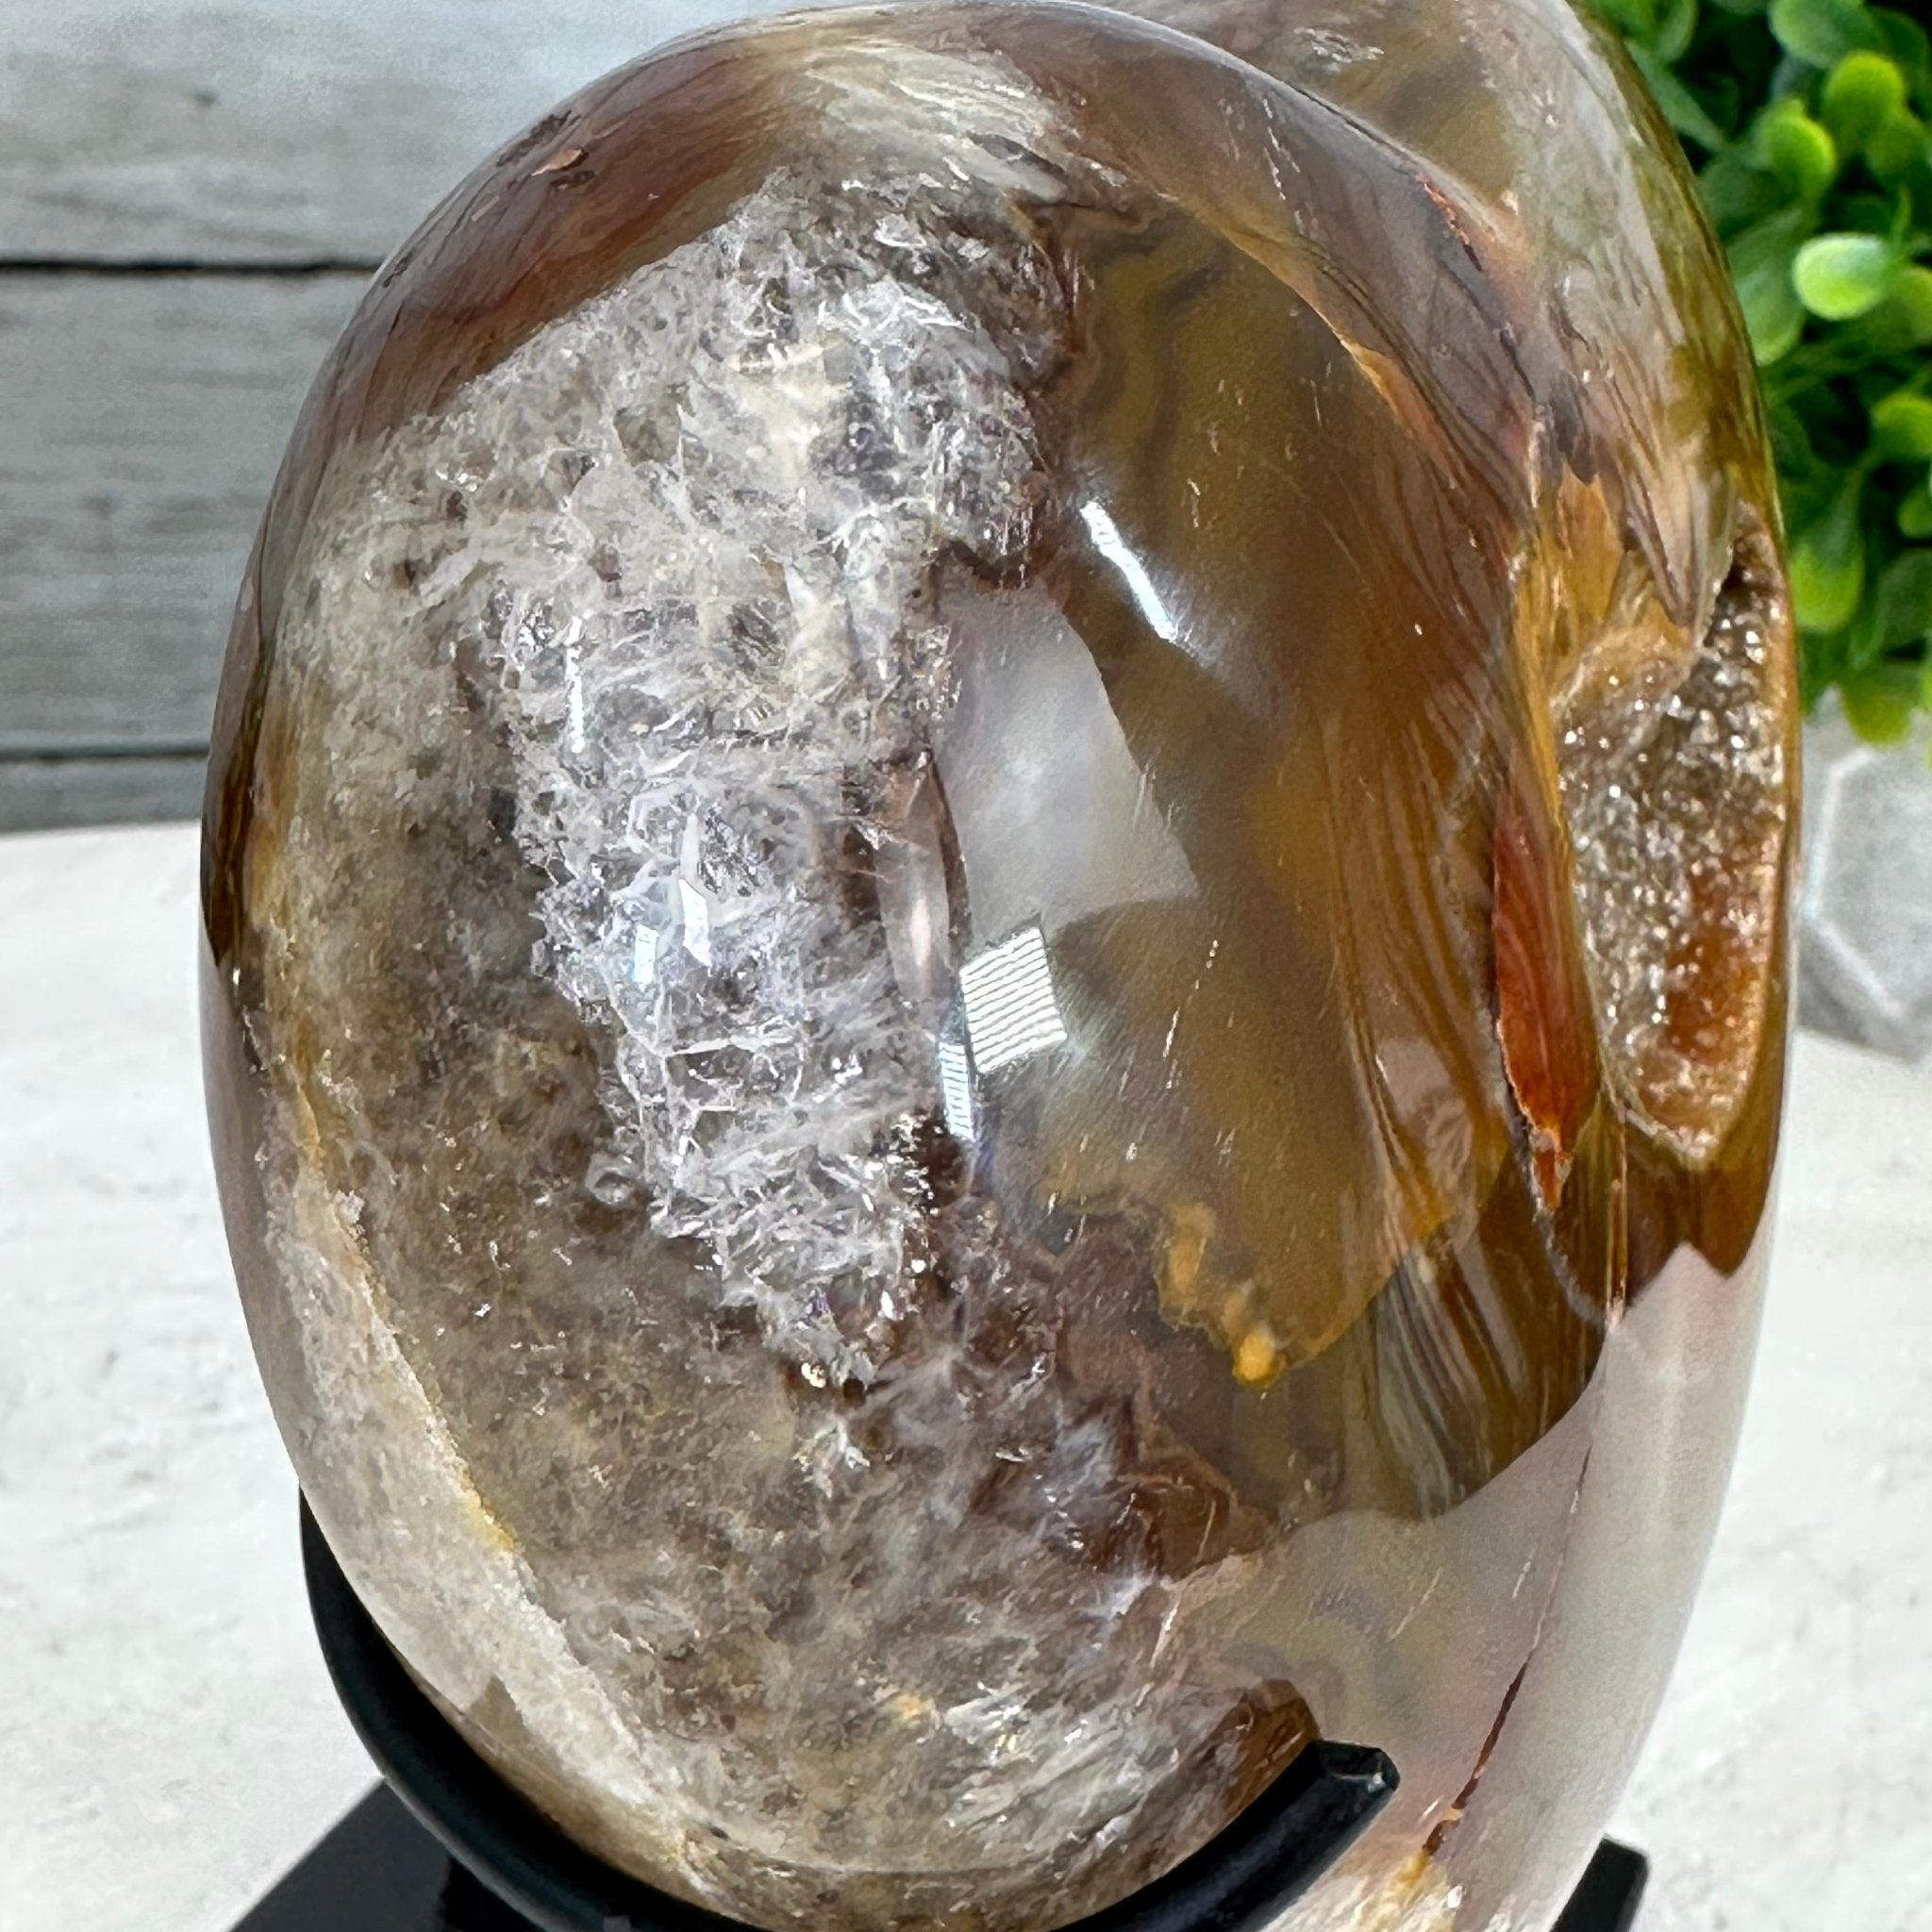 Polished Agate Heart Geode on a Metal Stand, 2.2 lbs & 4.8" Tall, Model #5468-0029 by Brazil Gems - Brazil GemsBrazil GemsPolished Agate Heart Geode on a Metal Stand, 2.2 lbs & 4.8" Tall, Model #5468-0029 by Brazil GemsHearts5468-0029